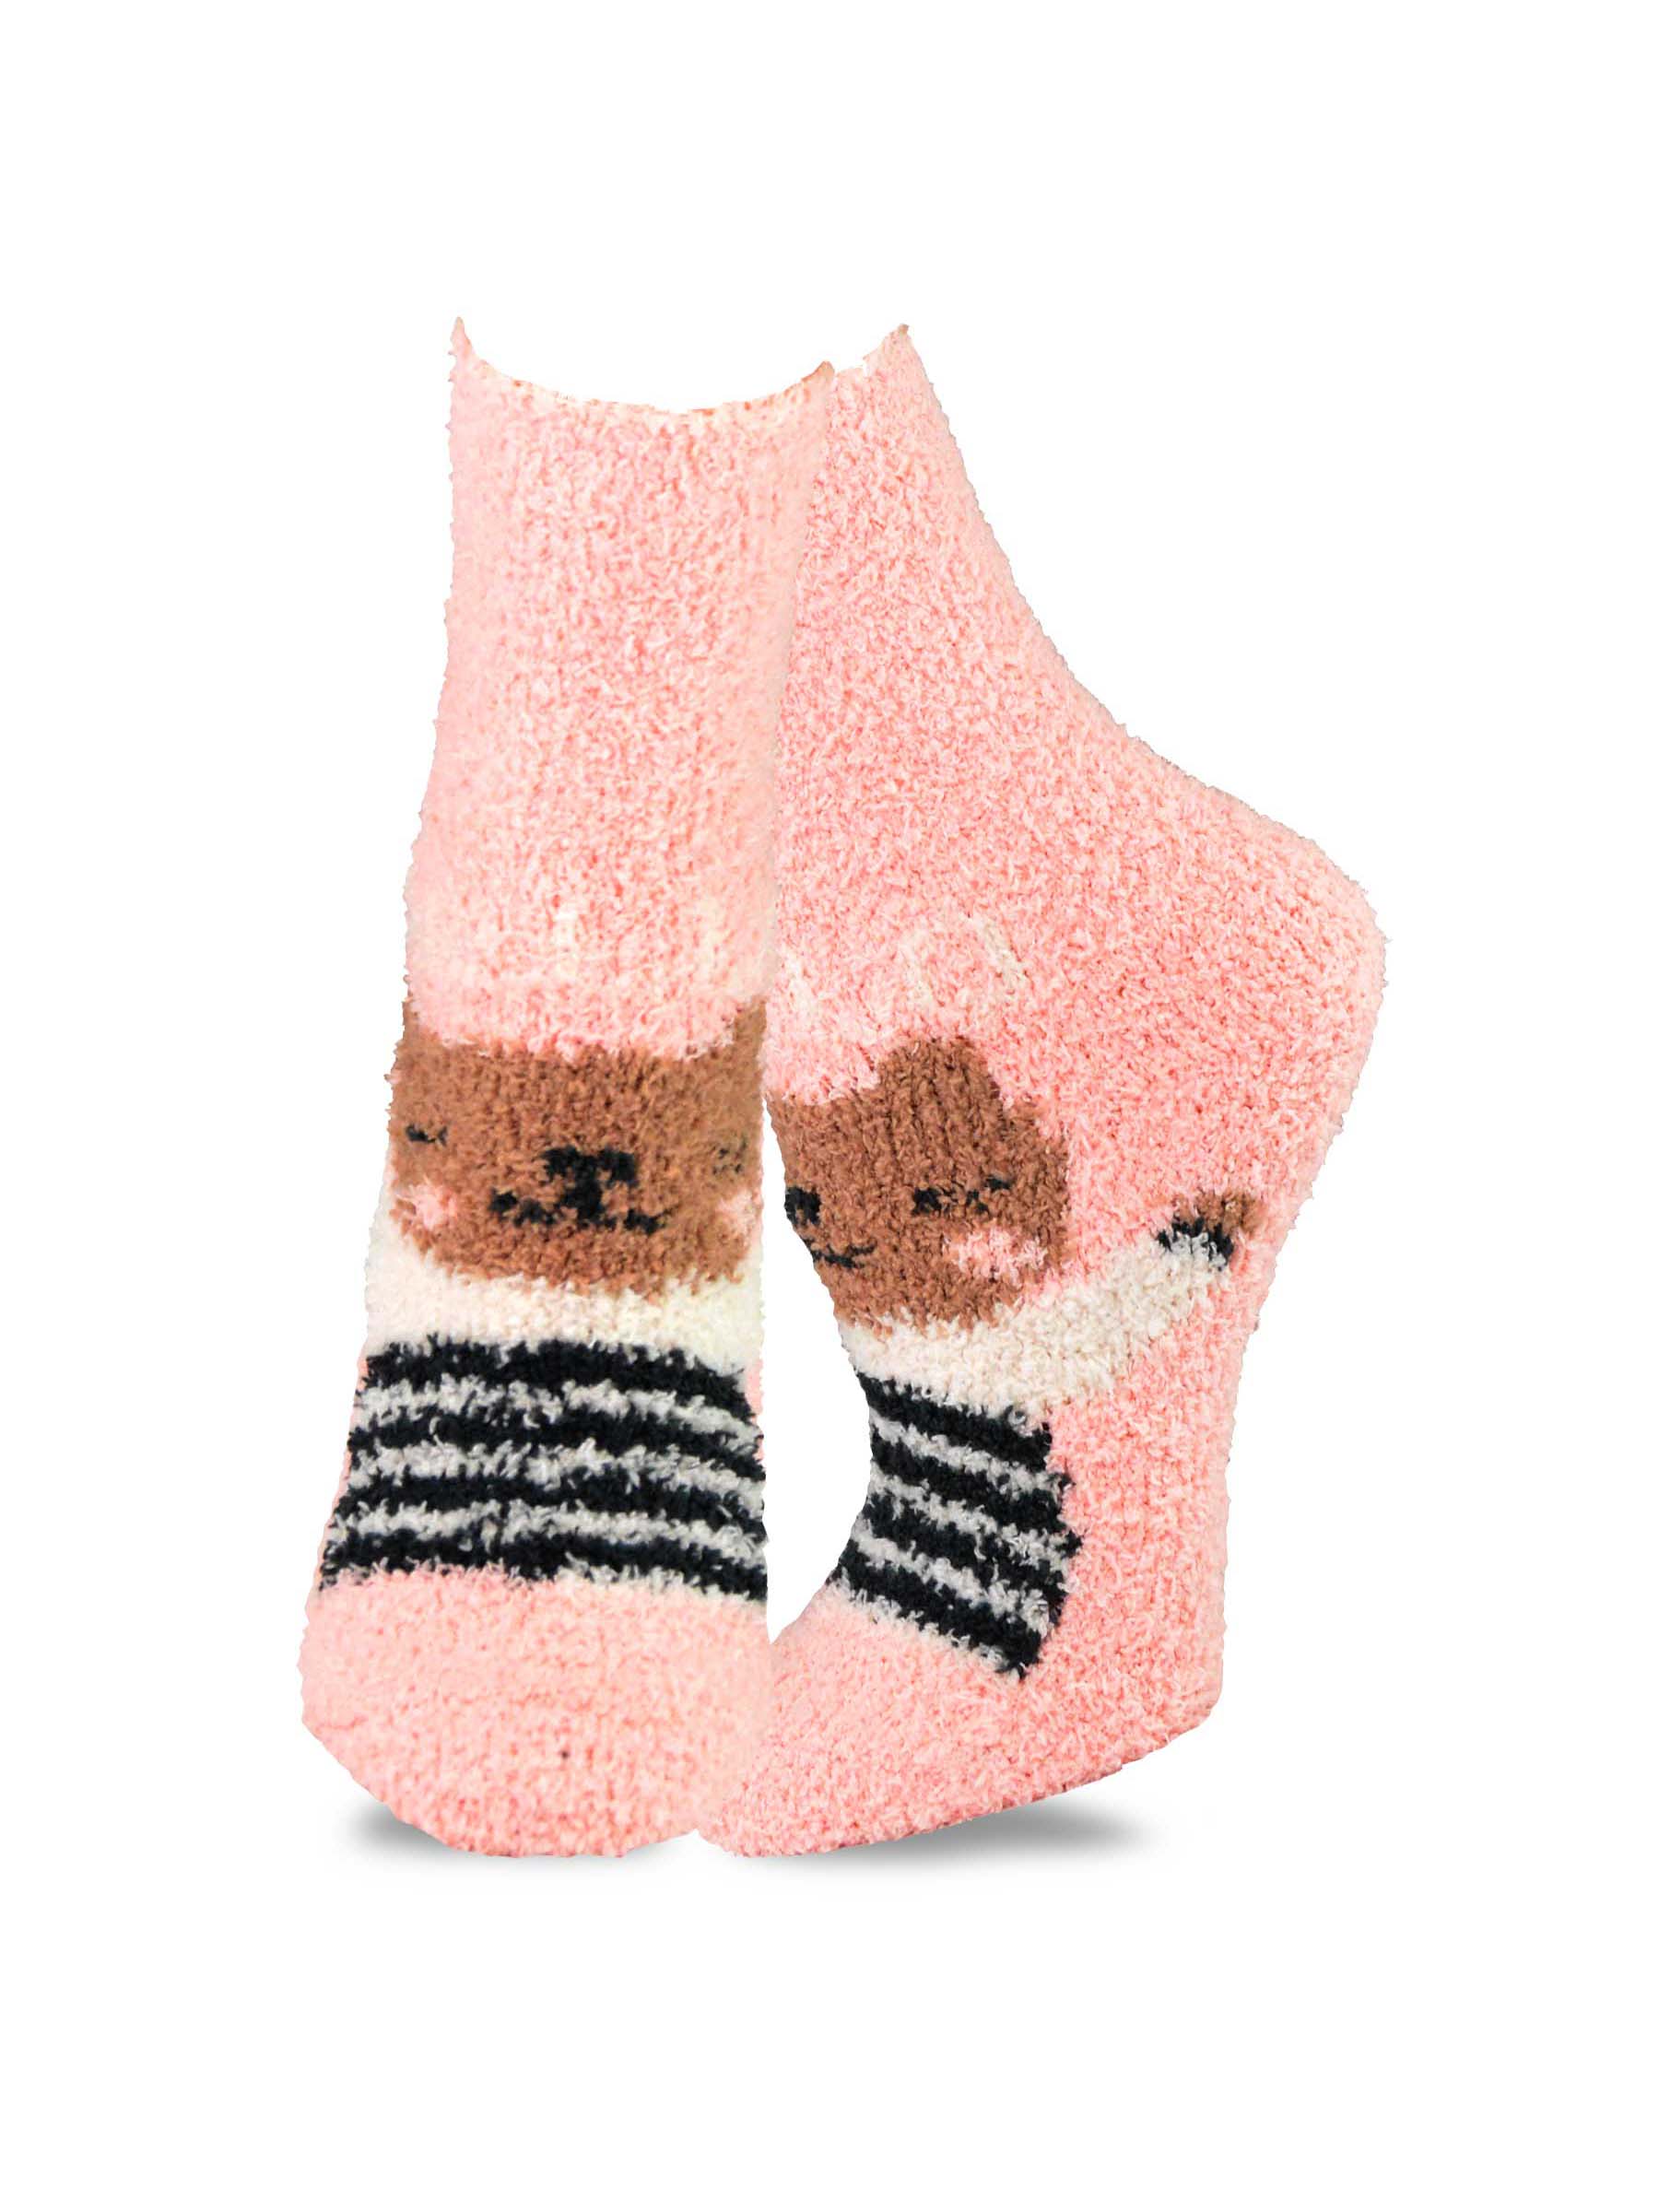 TeeHee Fashionable Cozy Fuzzy Slipper Crew Socks for Women 5-Pack - image 5 of 8